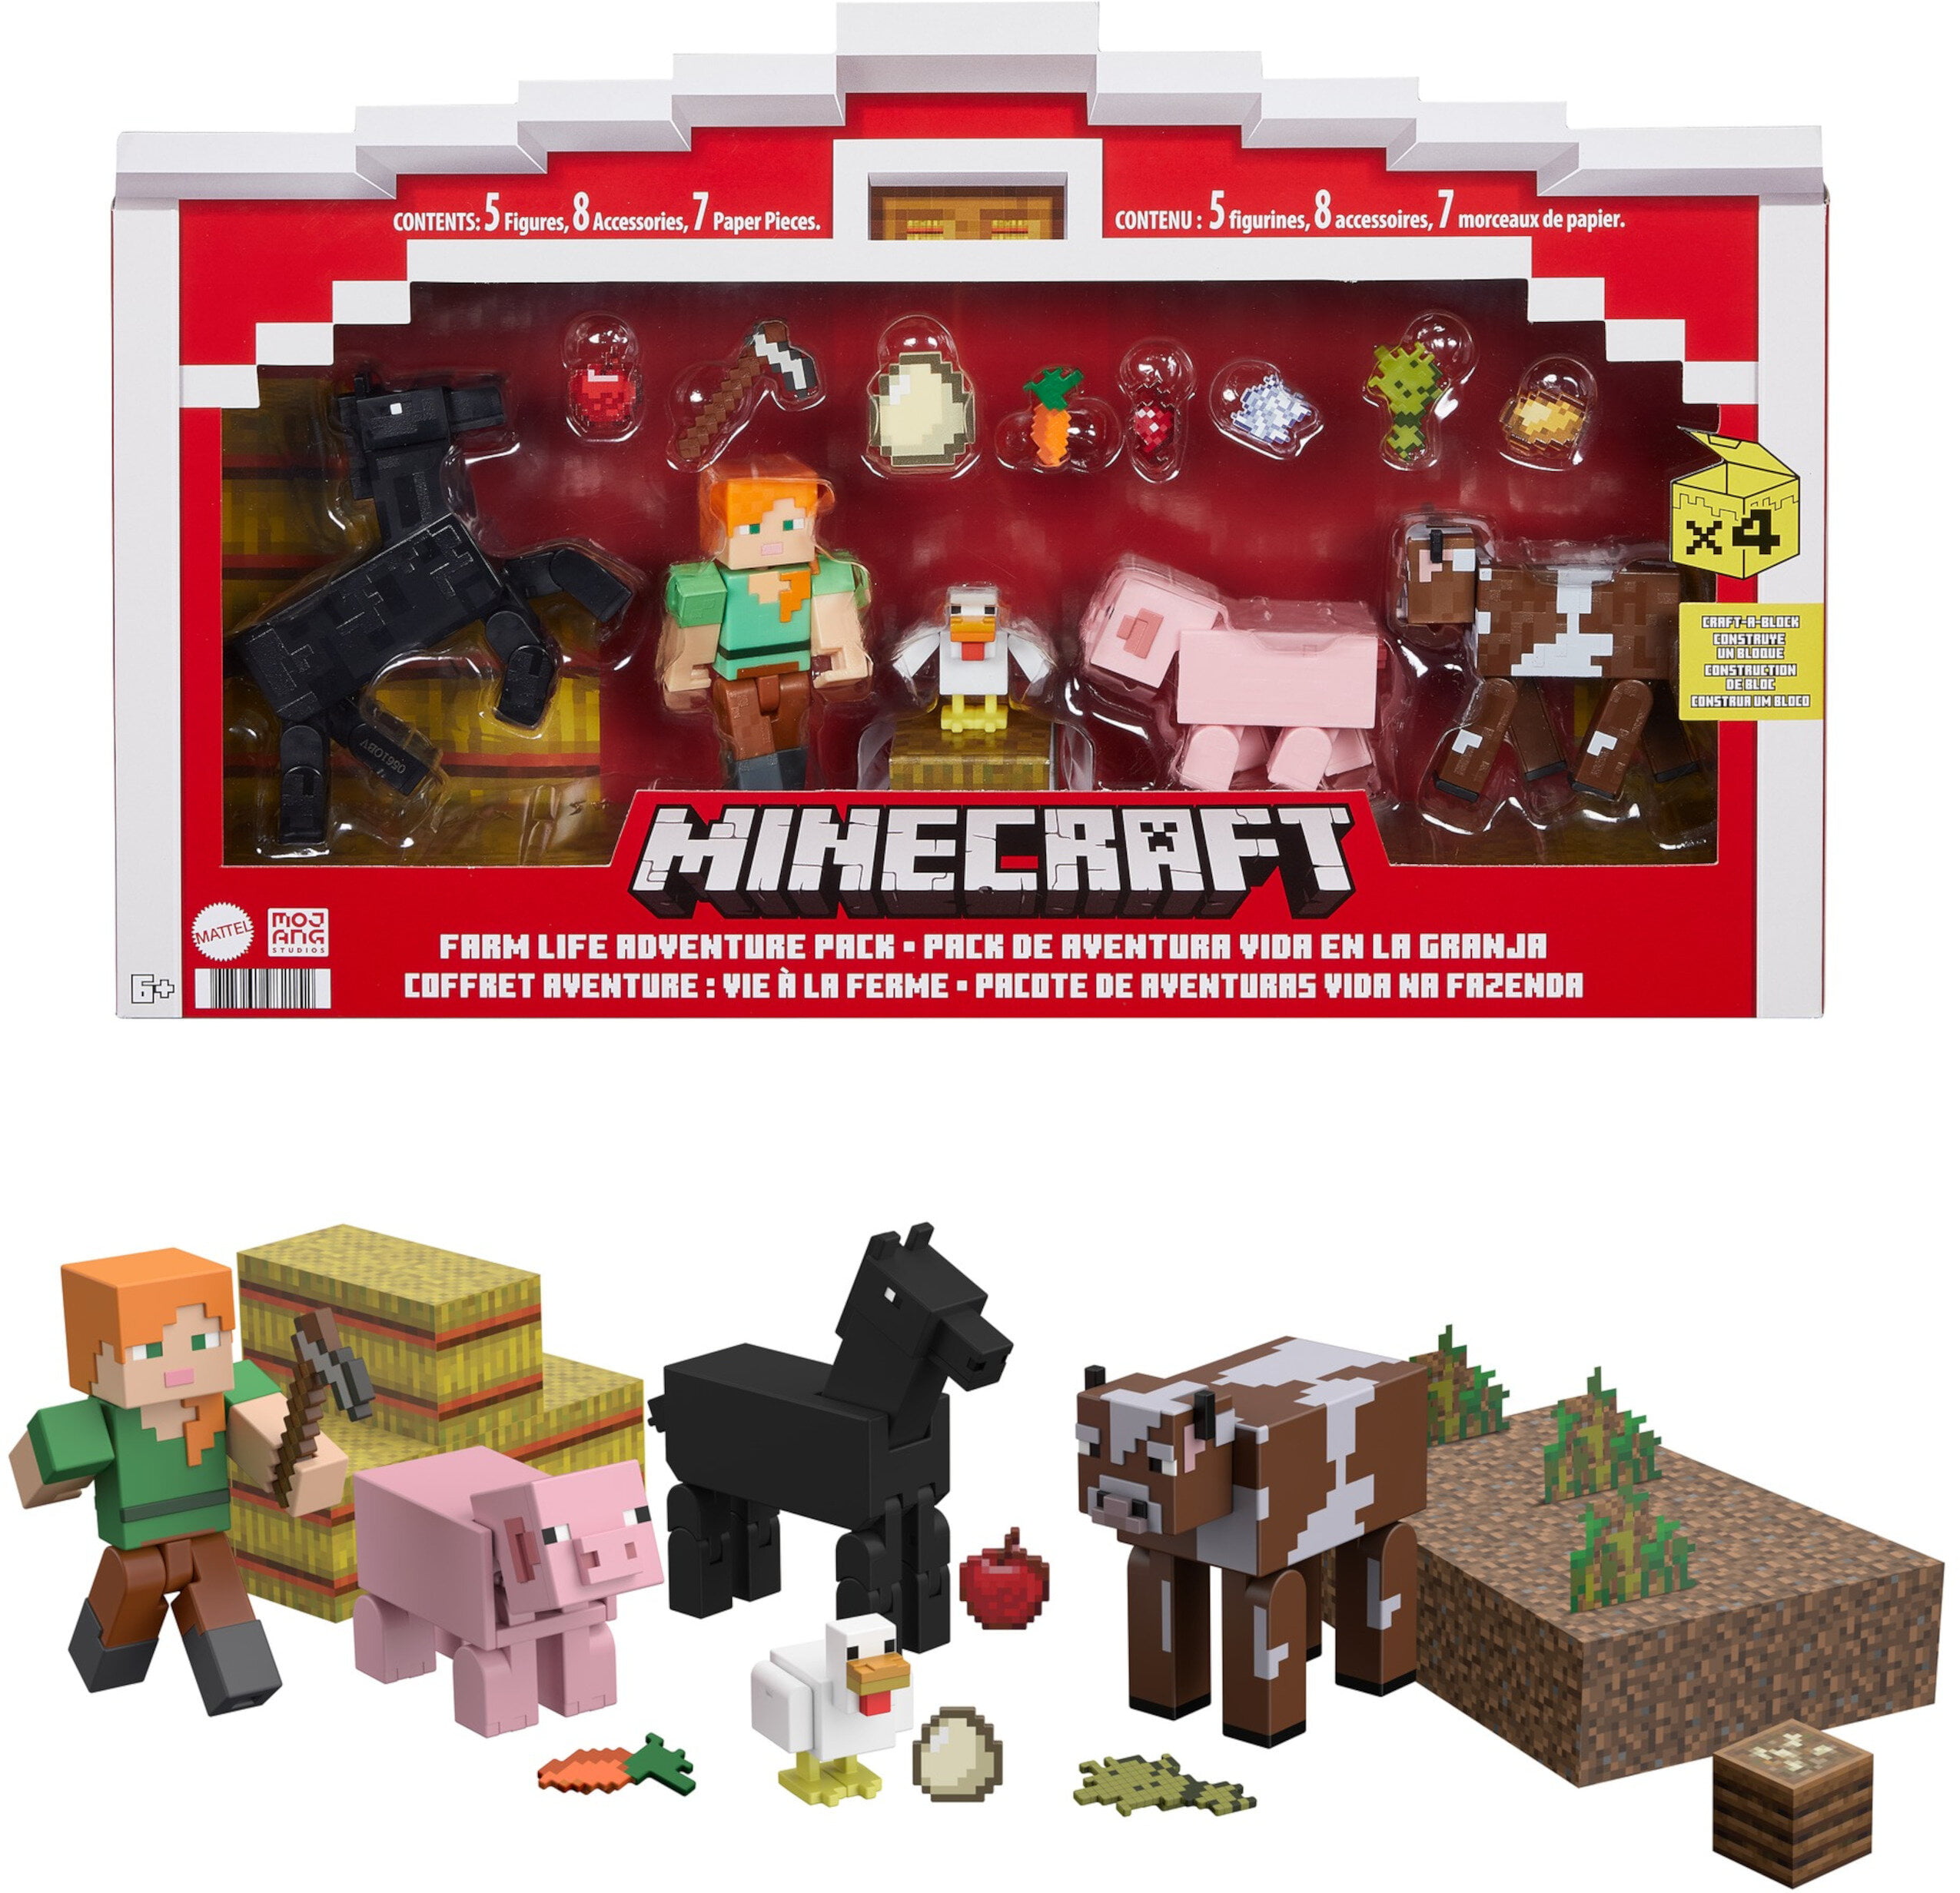 Minecraft Farm Life Adventure Pack Figures, Accessories And Papercraft  Blocks